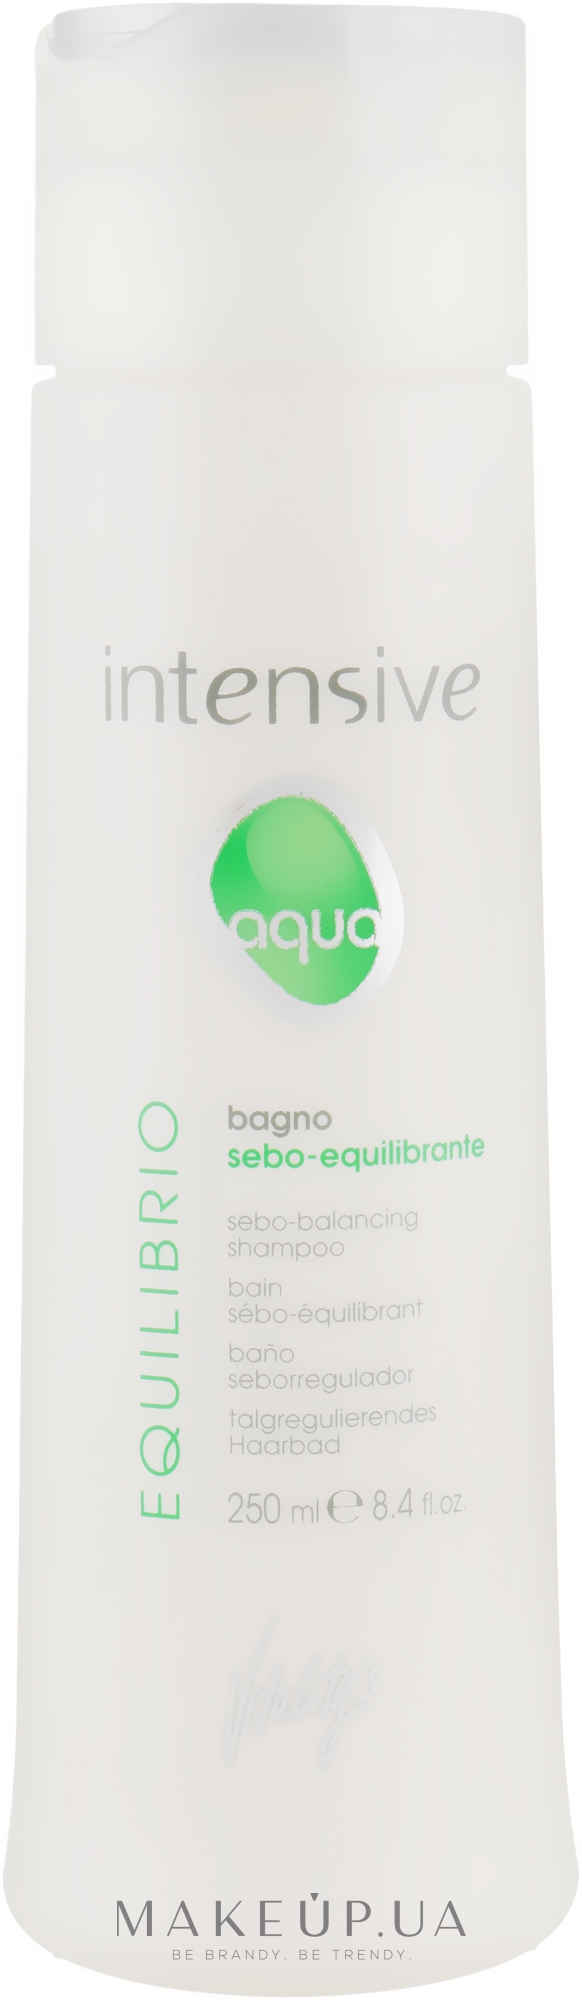 Шампунь себонормалізуючий - vitality's Intensive Aqua Equilibrio Sebo-Balancing Shampoo — фото 250ml